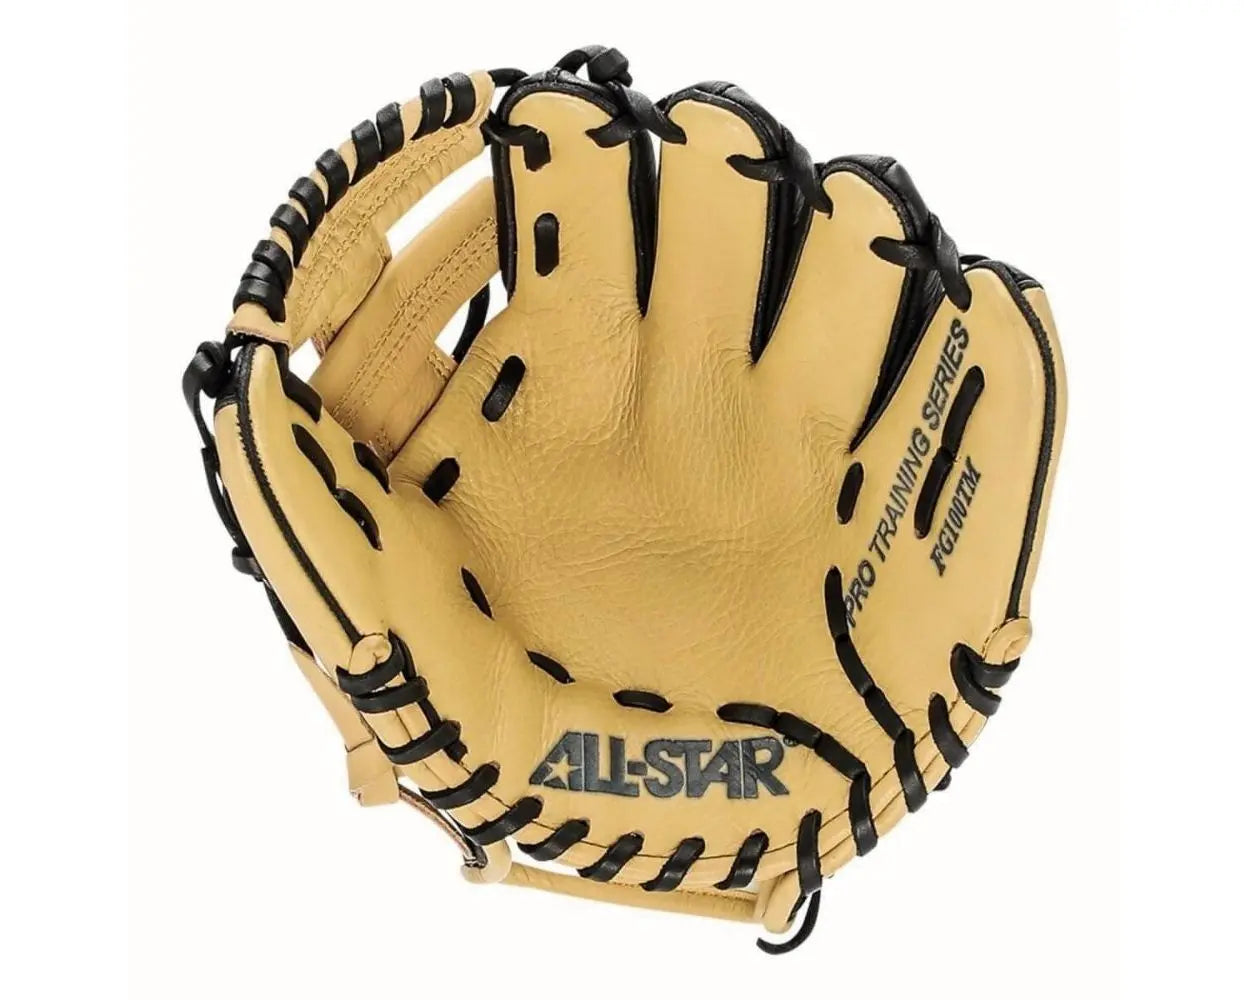 All Star Pro Series 9.5" Training Baseball Glove: FG100TM "The Pick"